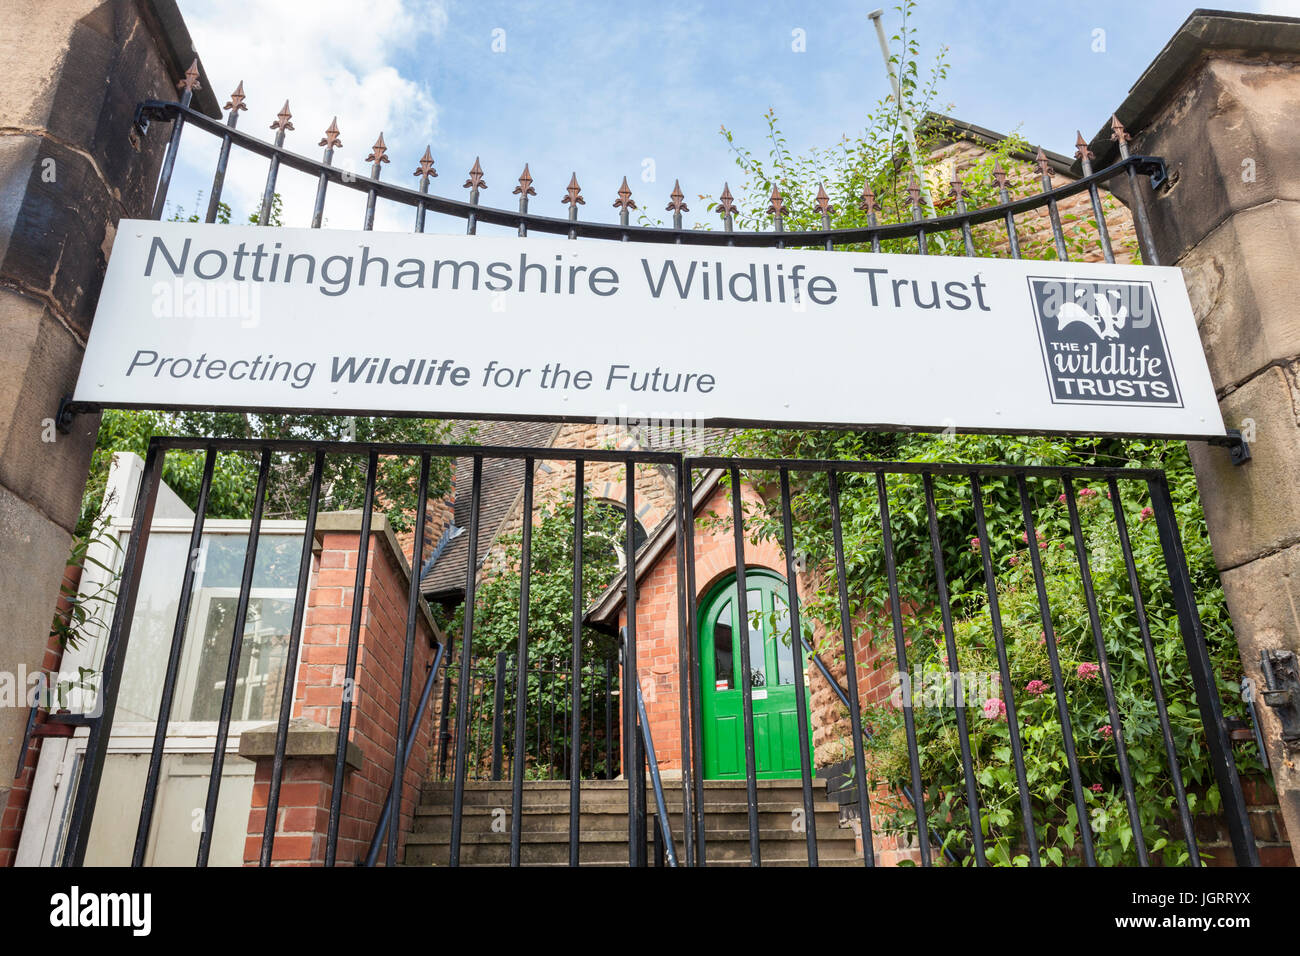 Nottinghamshire Wildlife Trust, part of the UK network of local Wildlife Trusts working to protect wildlife, Sneinton, Nottingham, England, UK Stock Photo